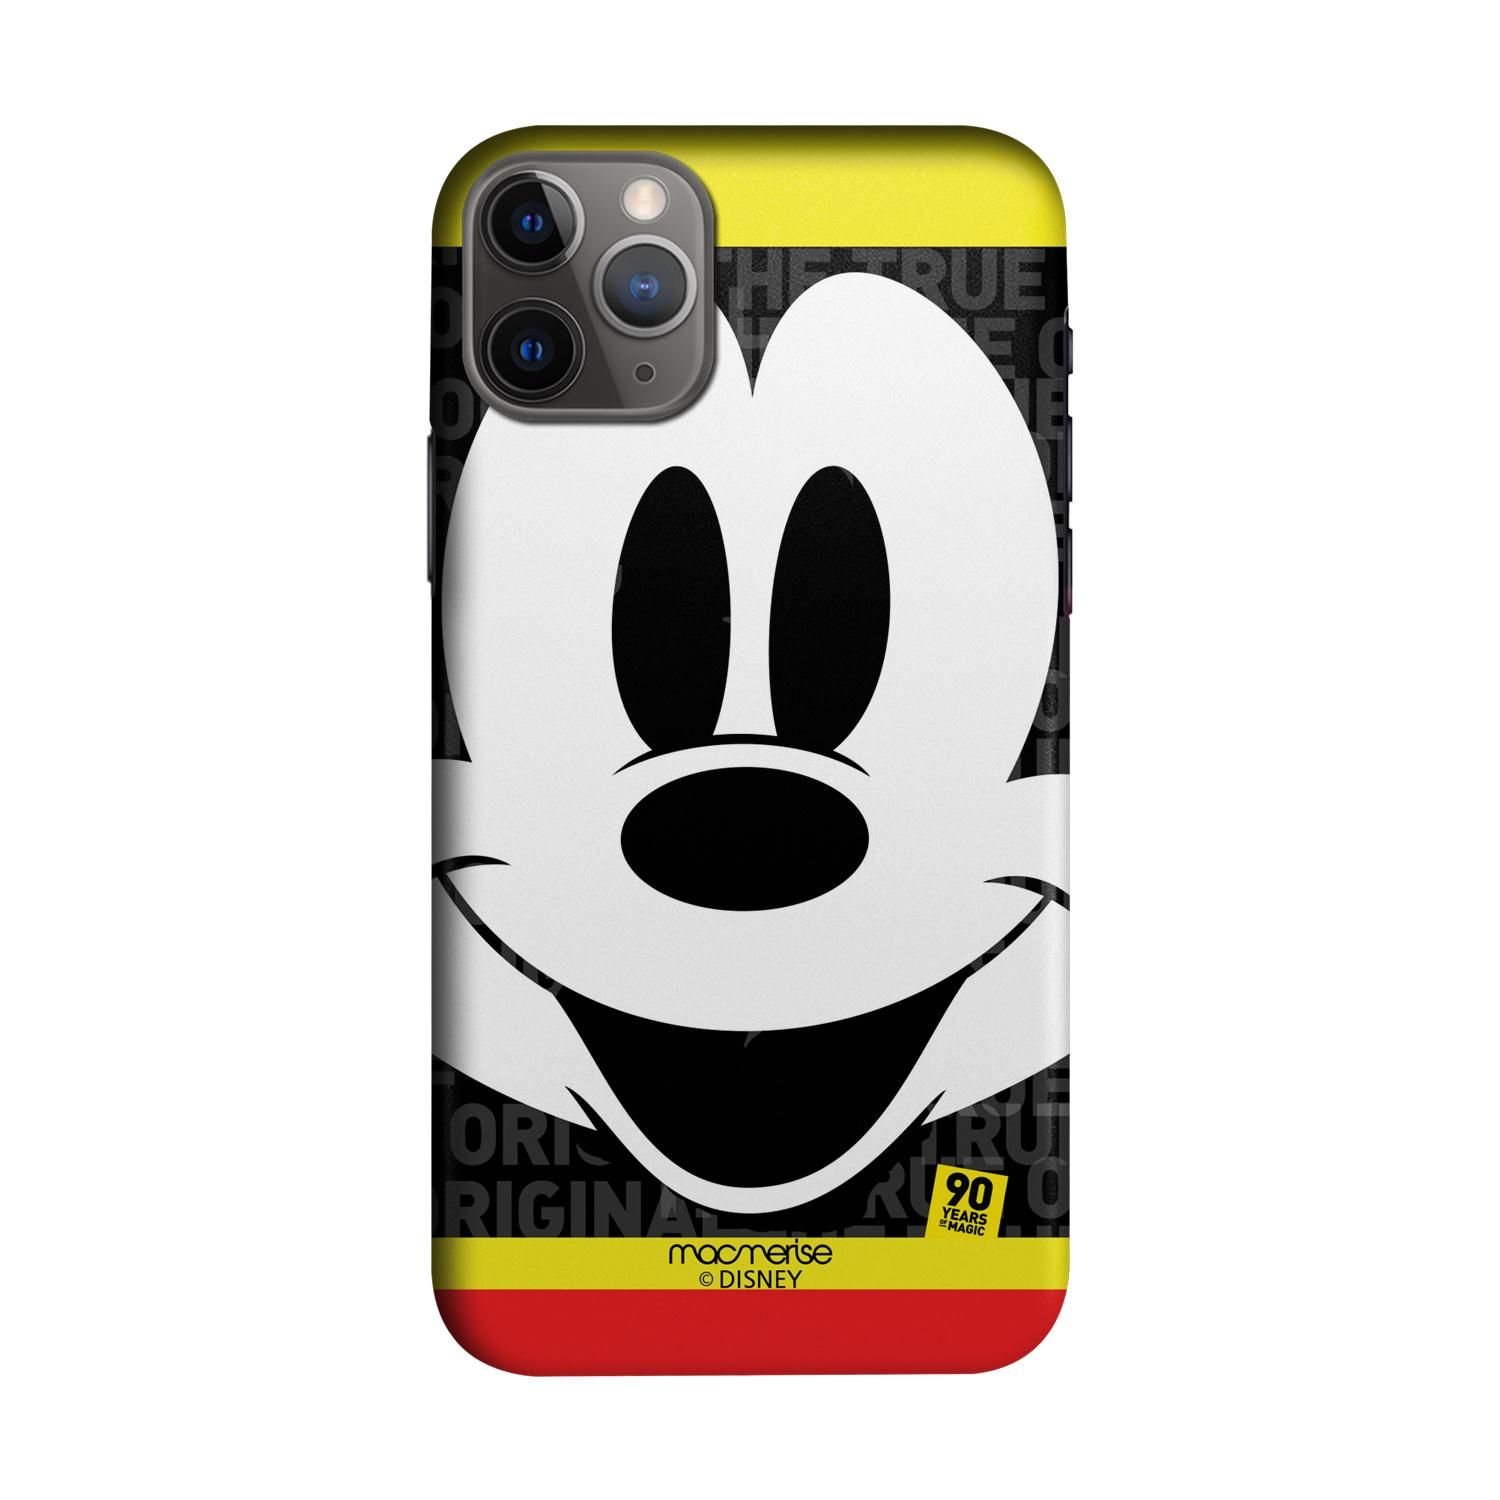 Buy Mickey Original - Sleek Phone Case for iPhone 11 Pro Max Online